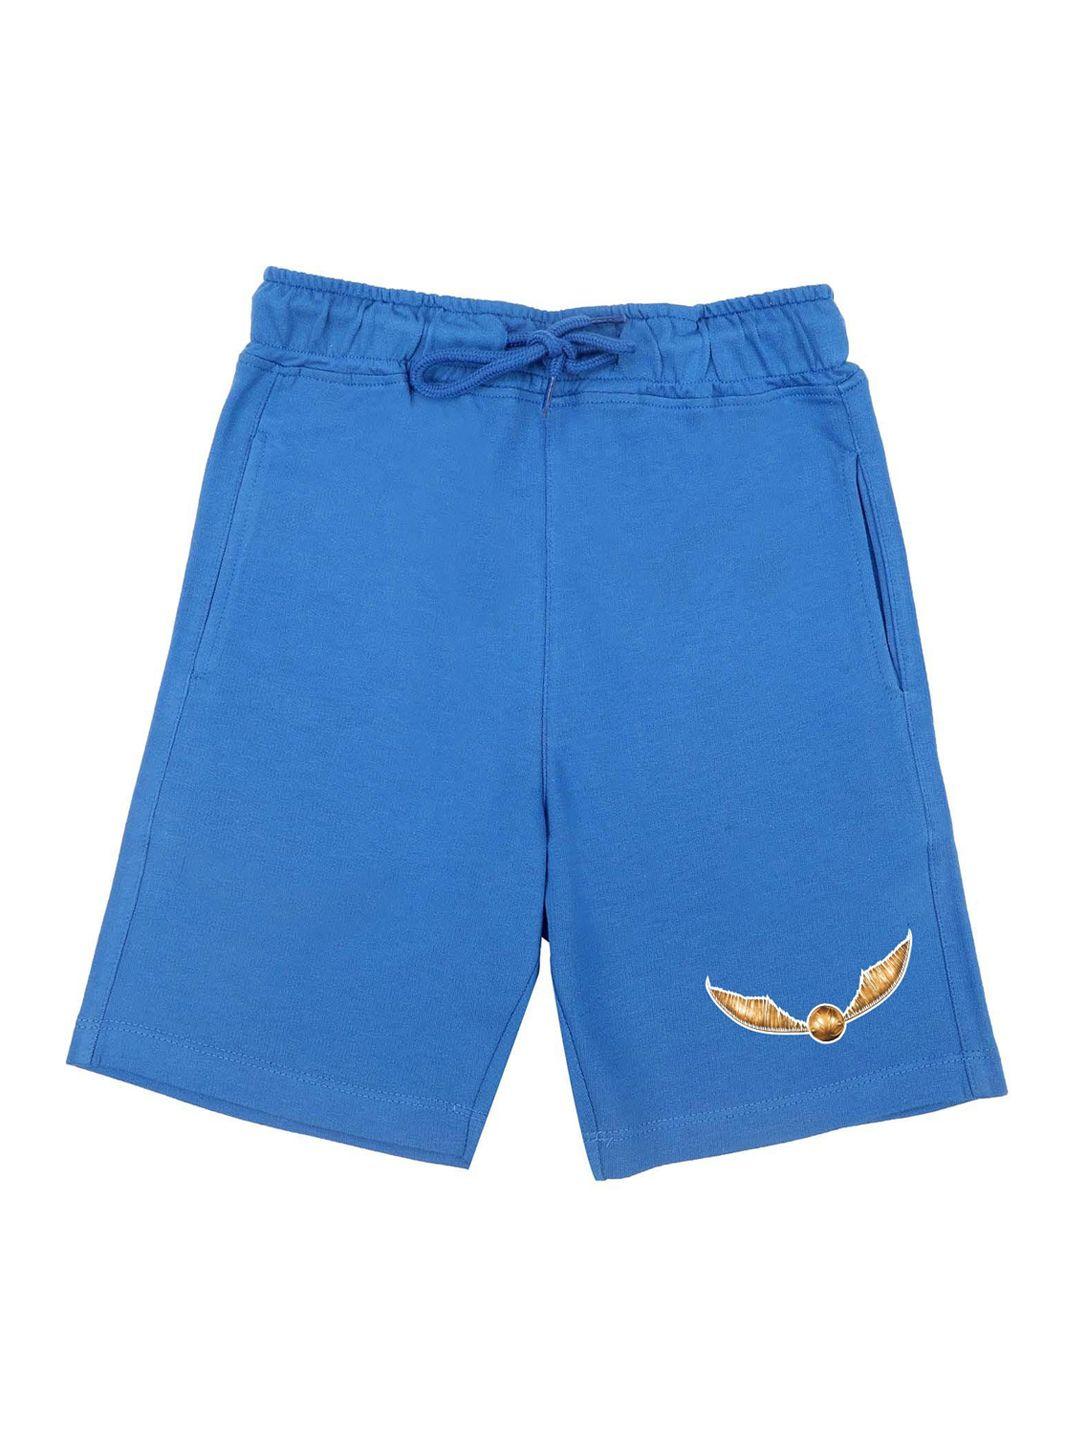 harry potter boys blue solid regular fit regular shorts with printed detailing